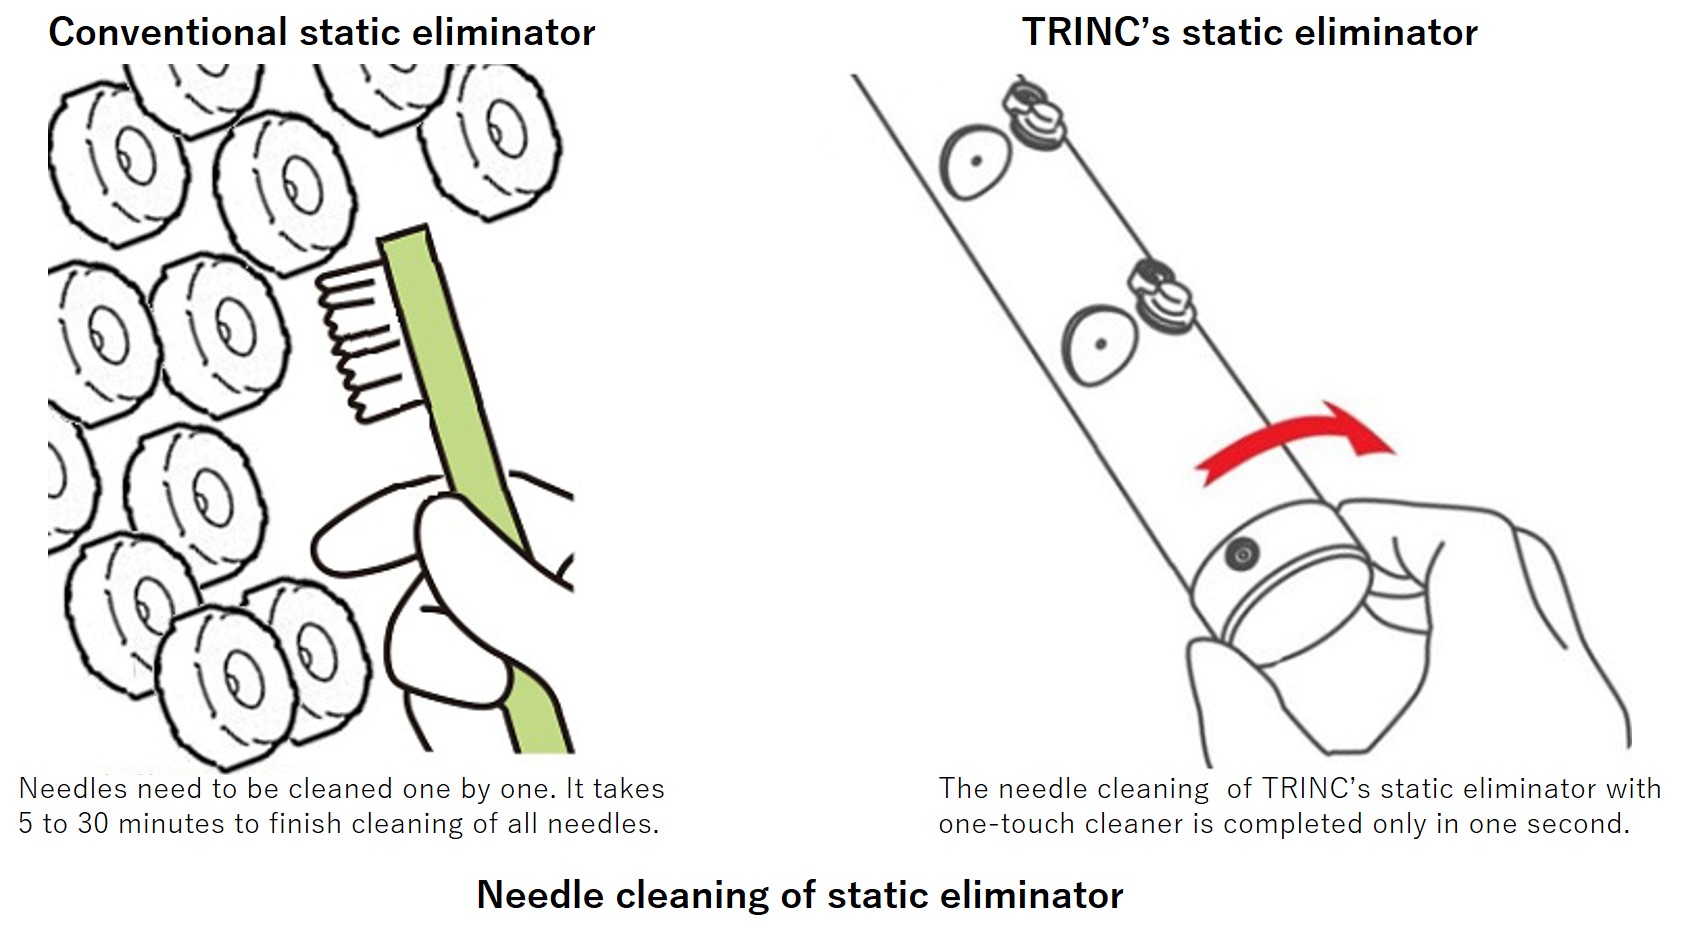 Needle cleaning of static elminator - Conventional static elimination - TRINC's static eliminator